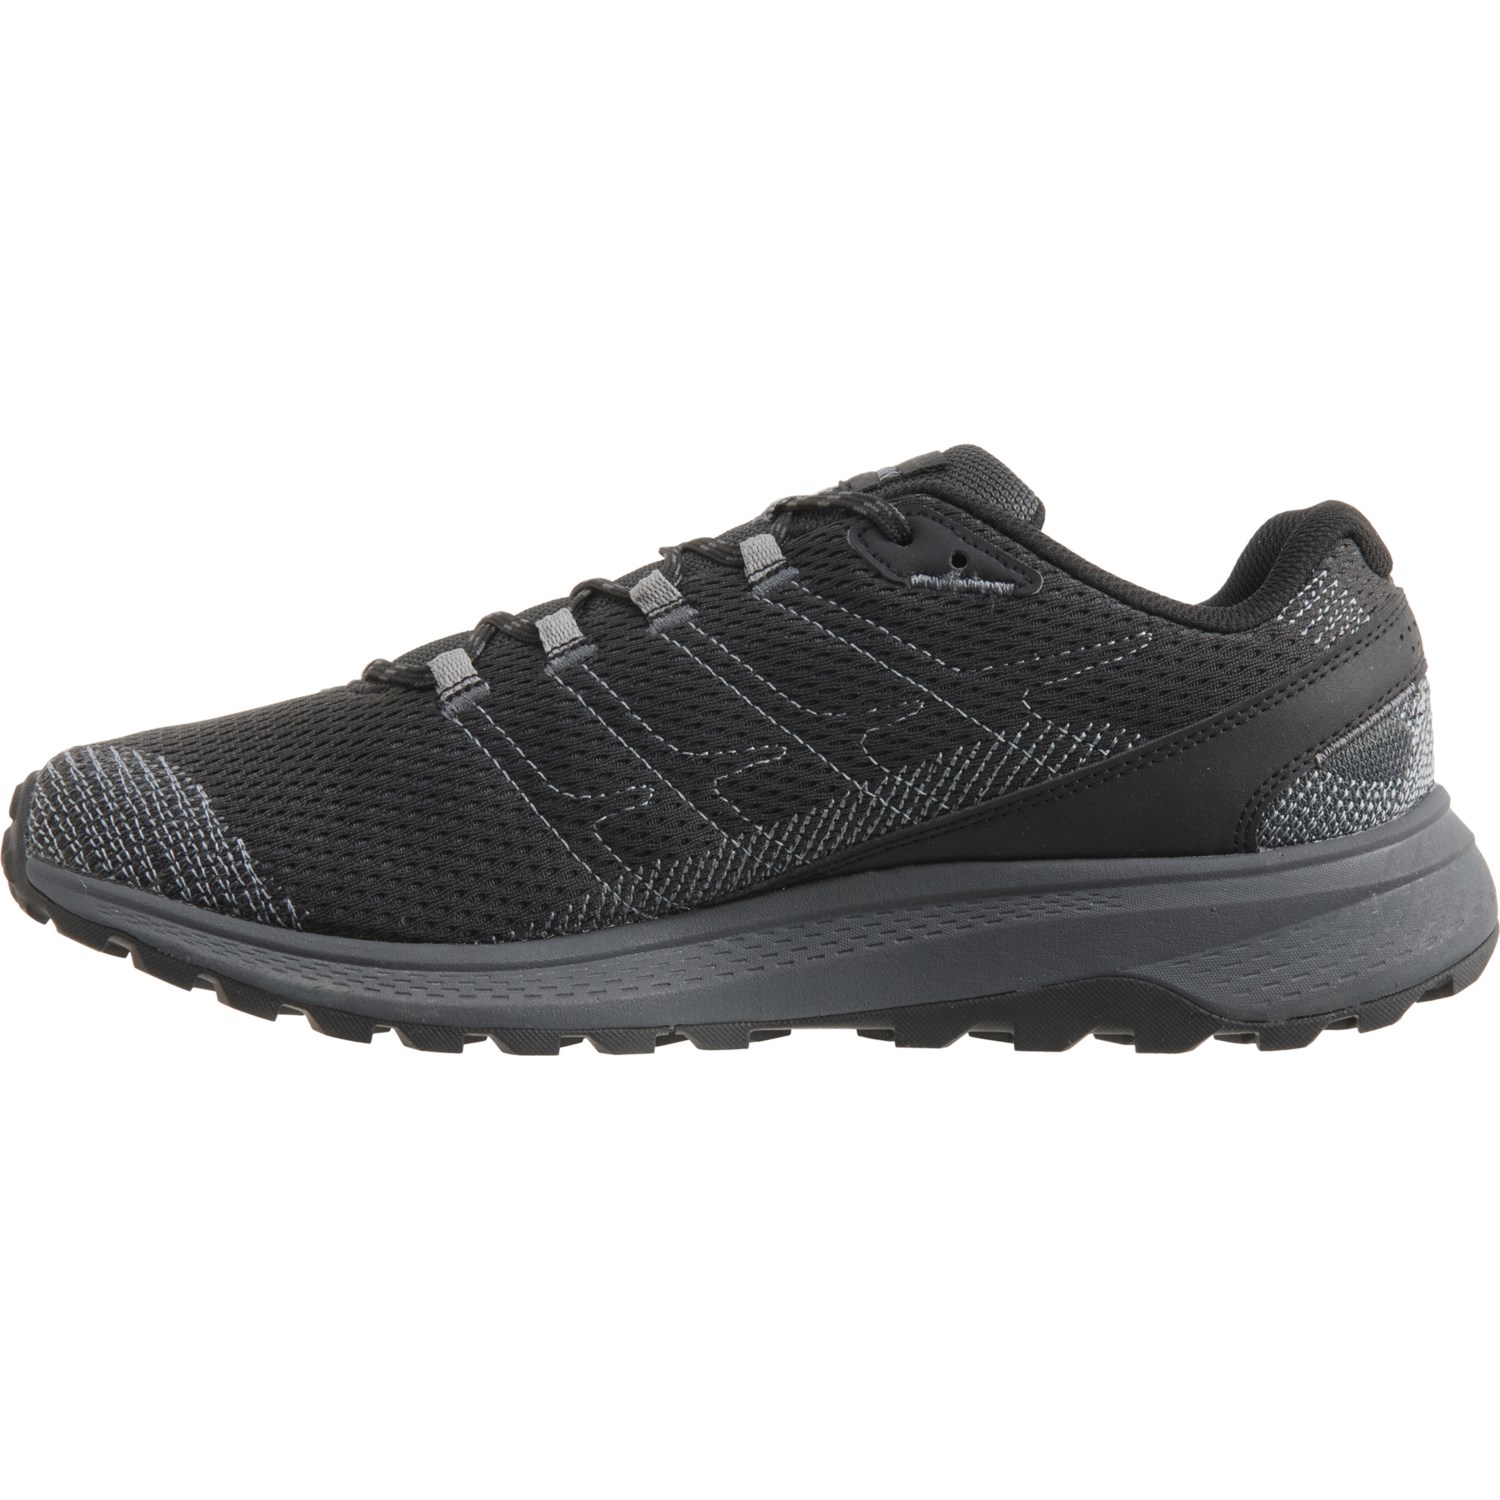 Merrell Fly Strike Trail Running Shoes (For Men) - Save 51%